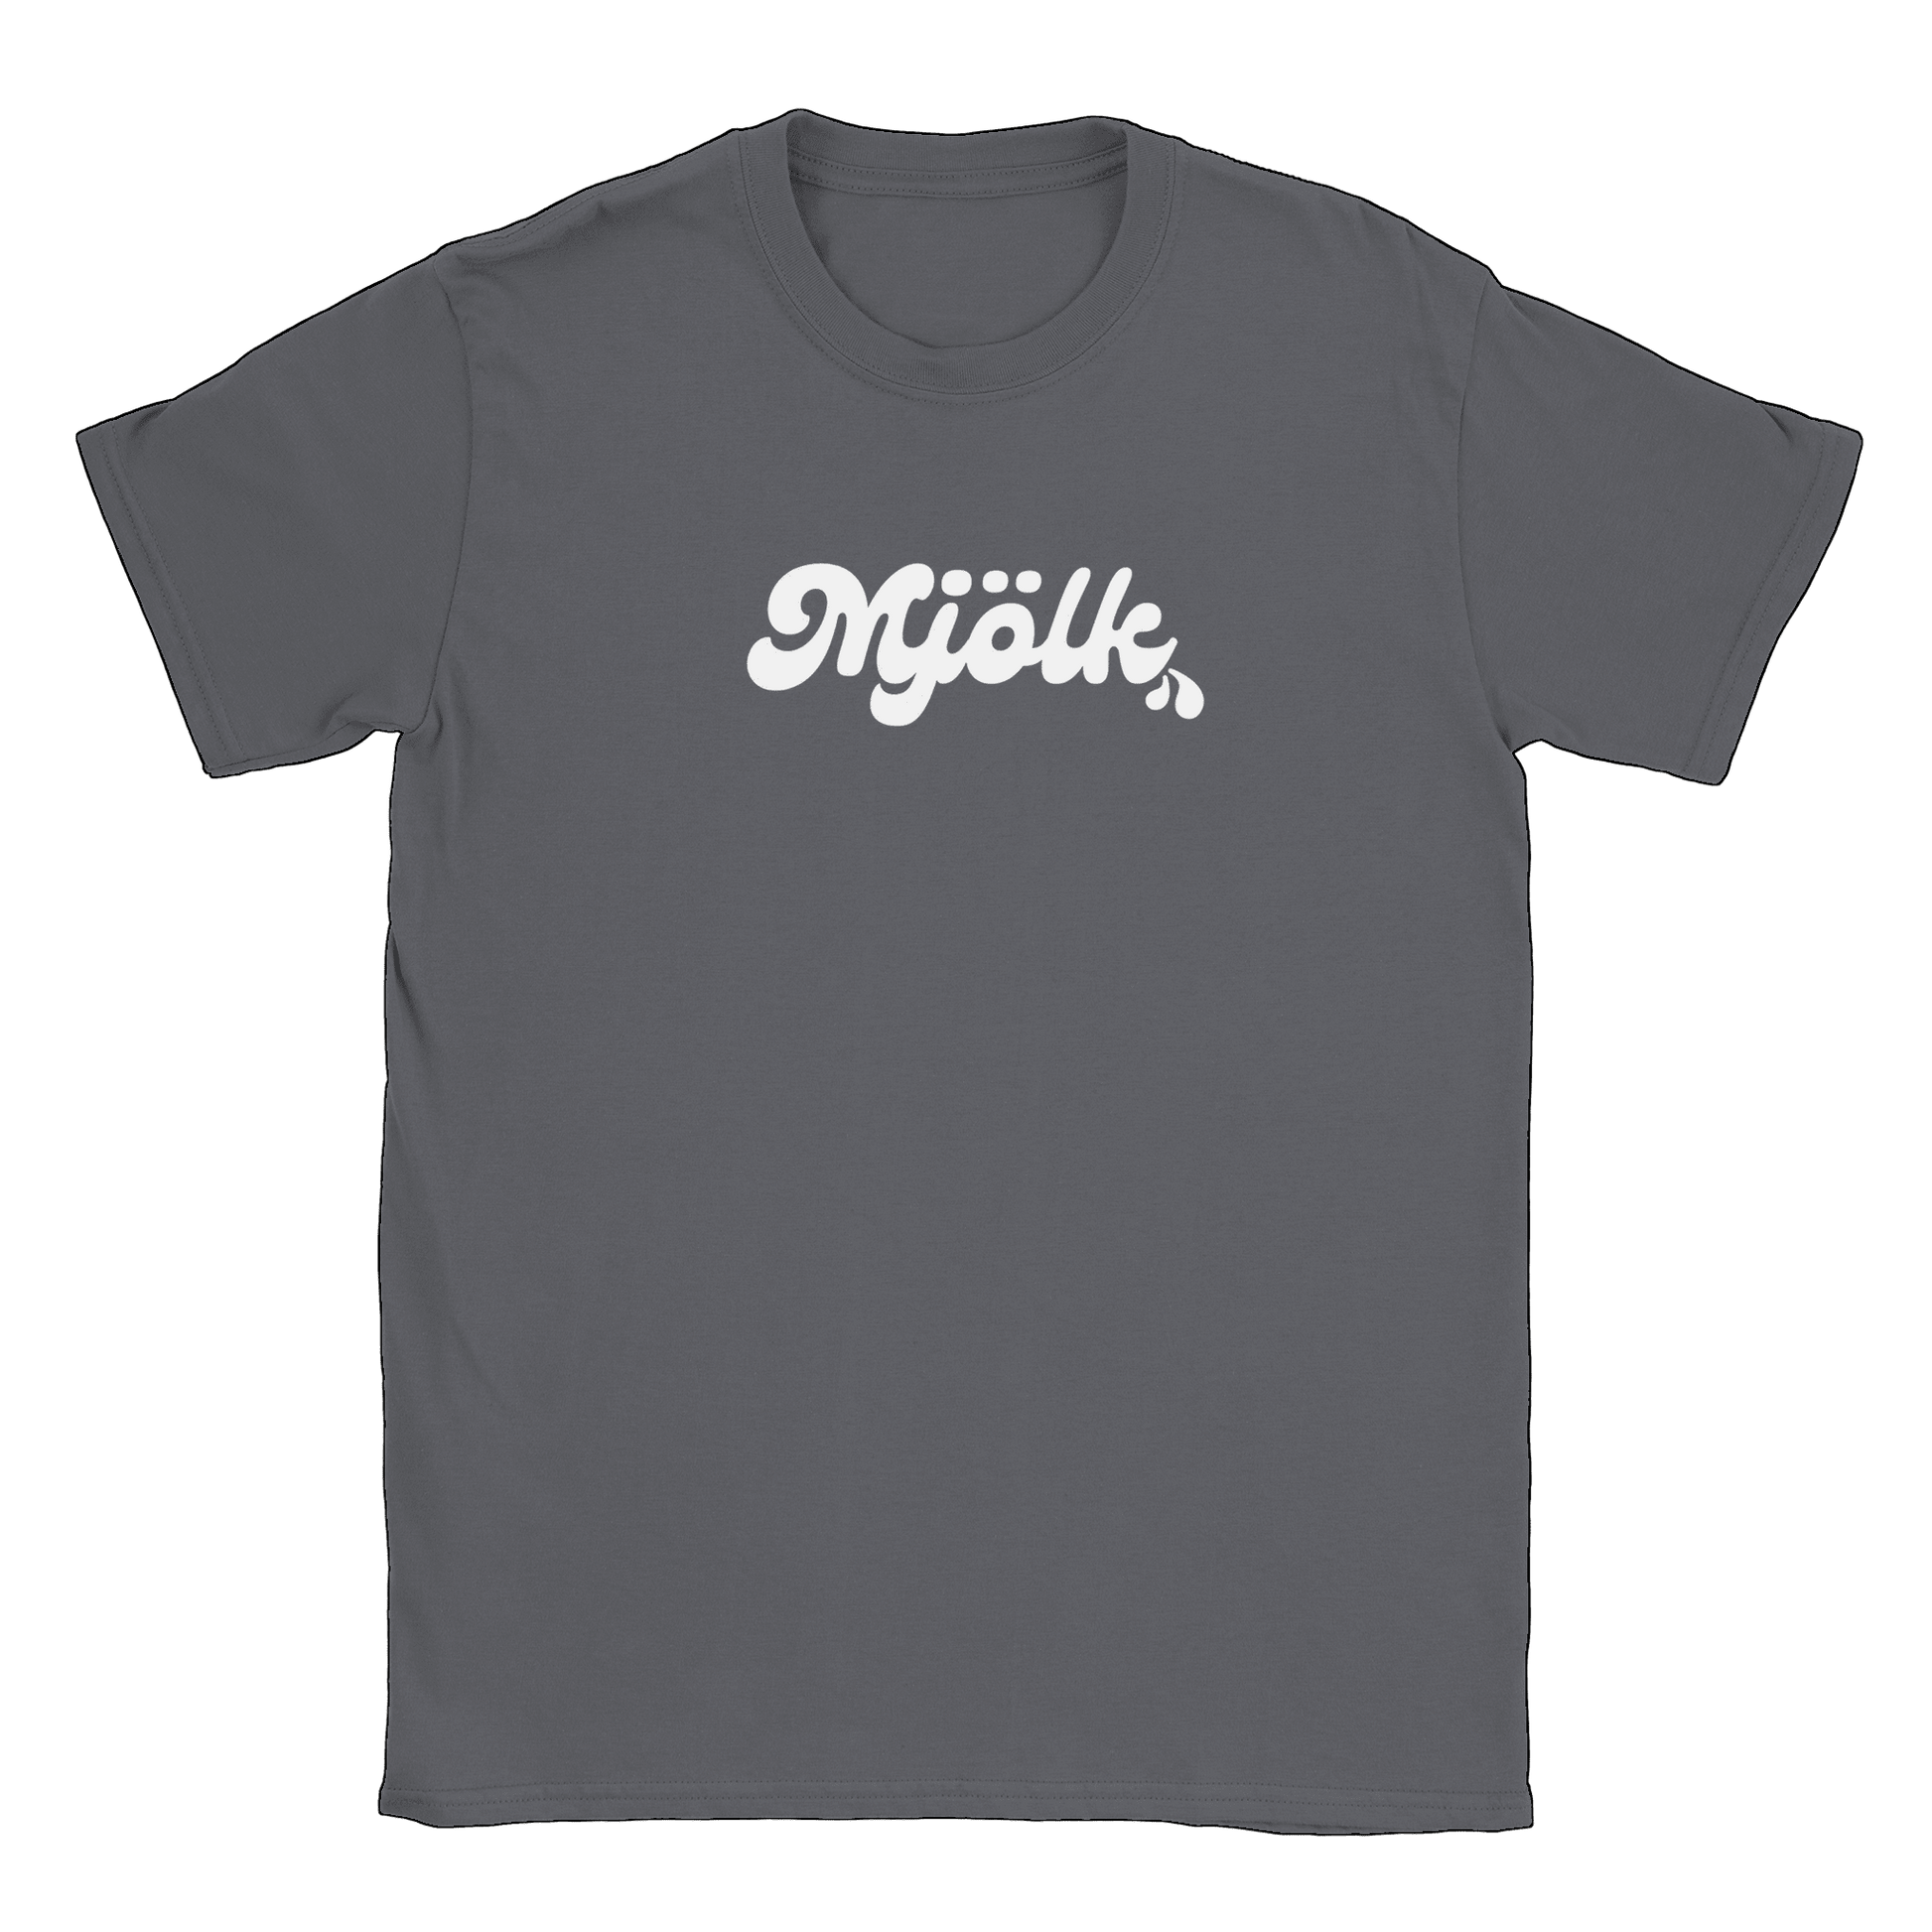 Mjölk - T-shirt Charcoal